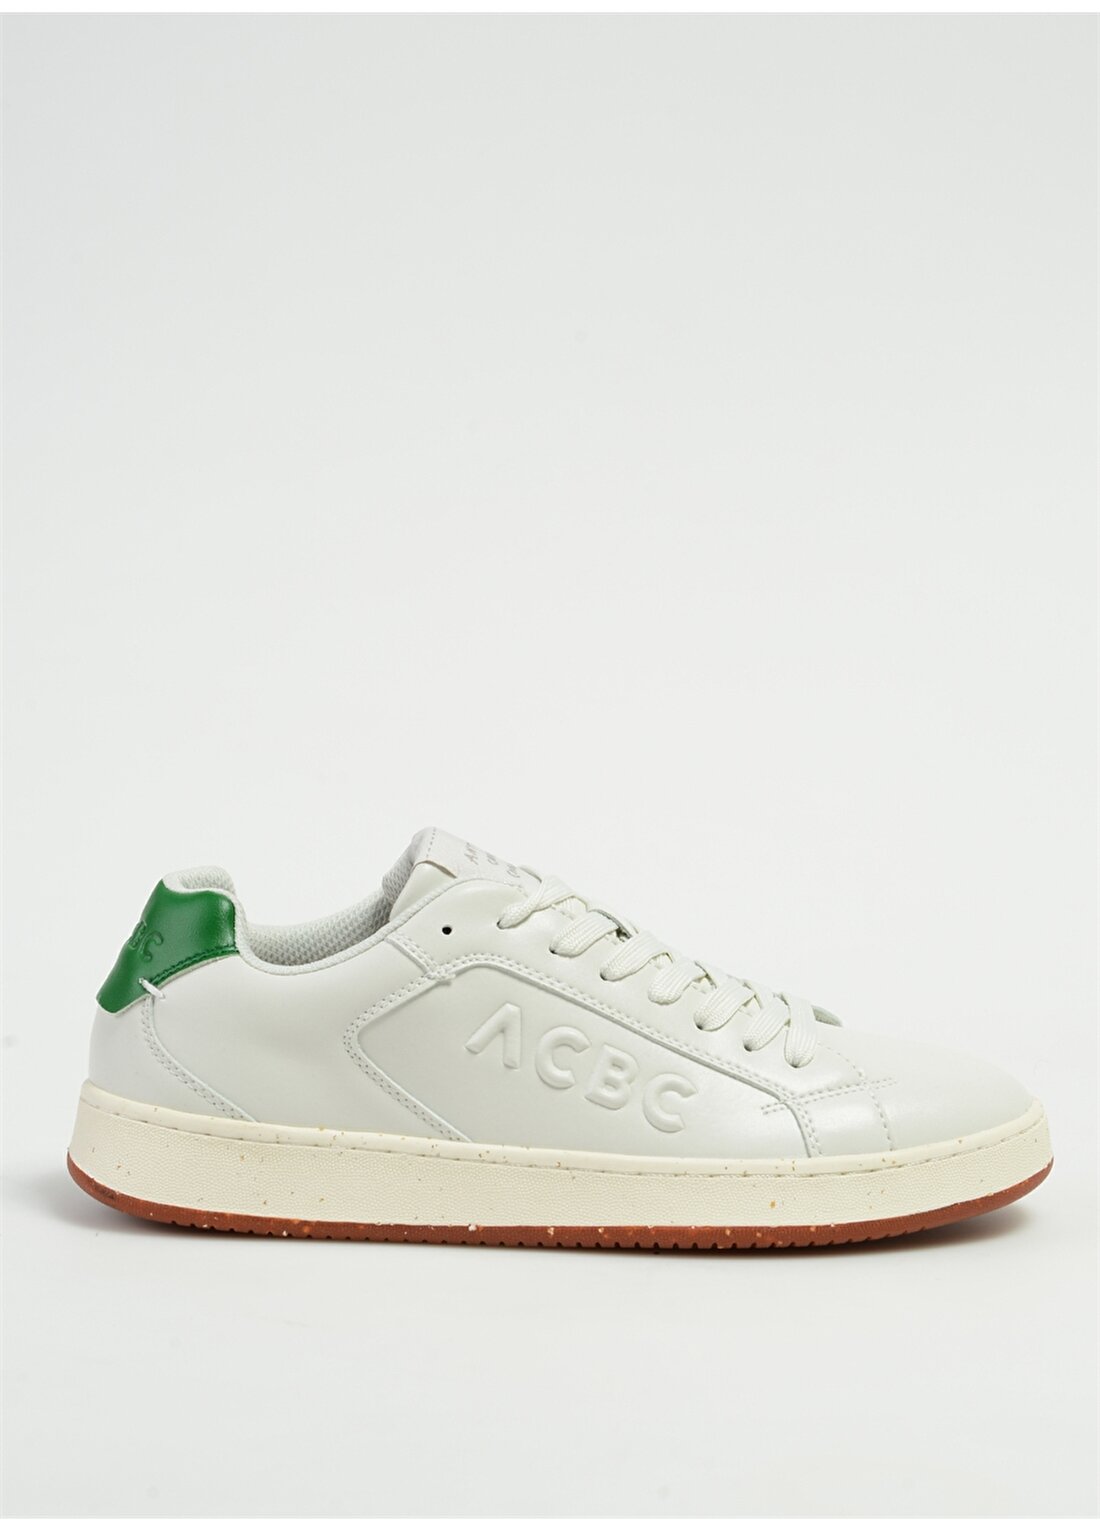 Acbc Beyaz - Yeşil Erkek Deri Sneaker SHACBTL